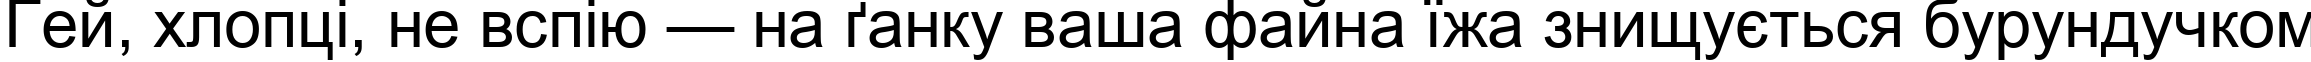 Пример написания шрифтом Arial Unicode MS текста на украинском